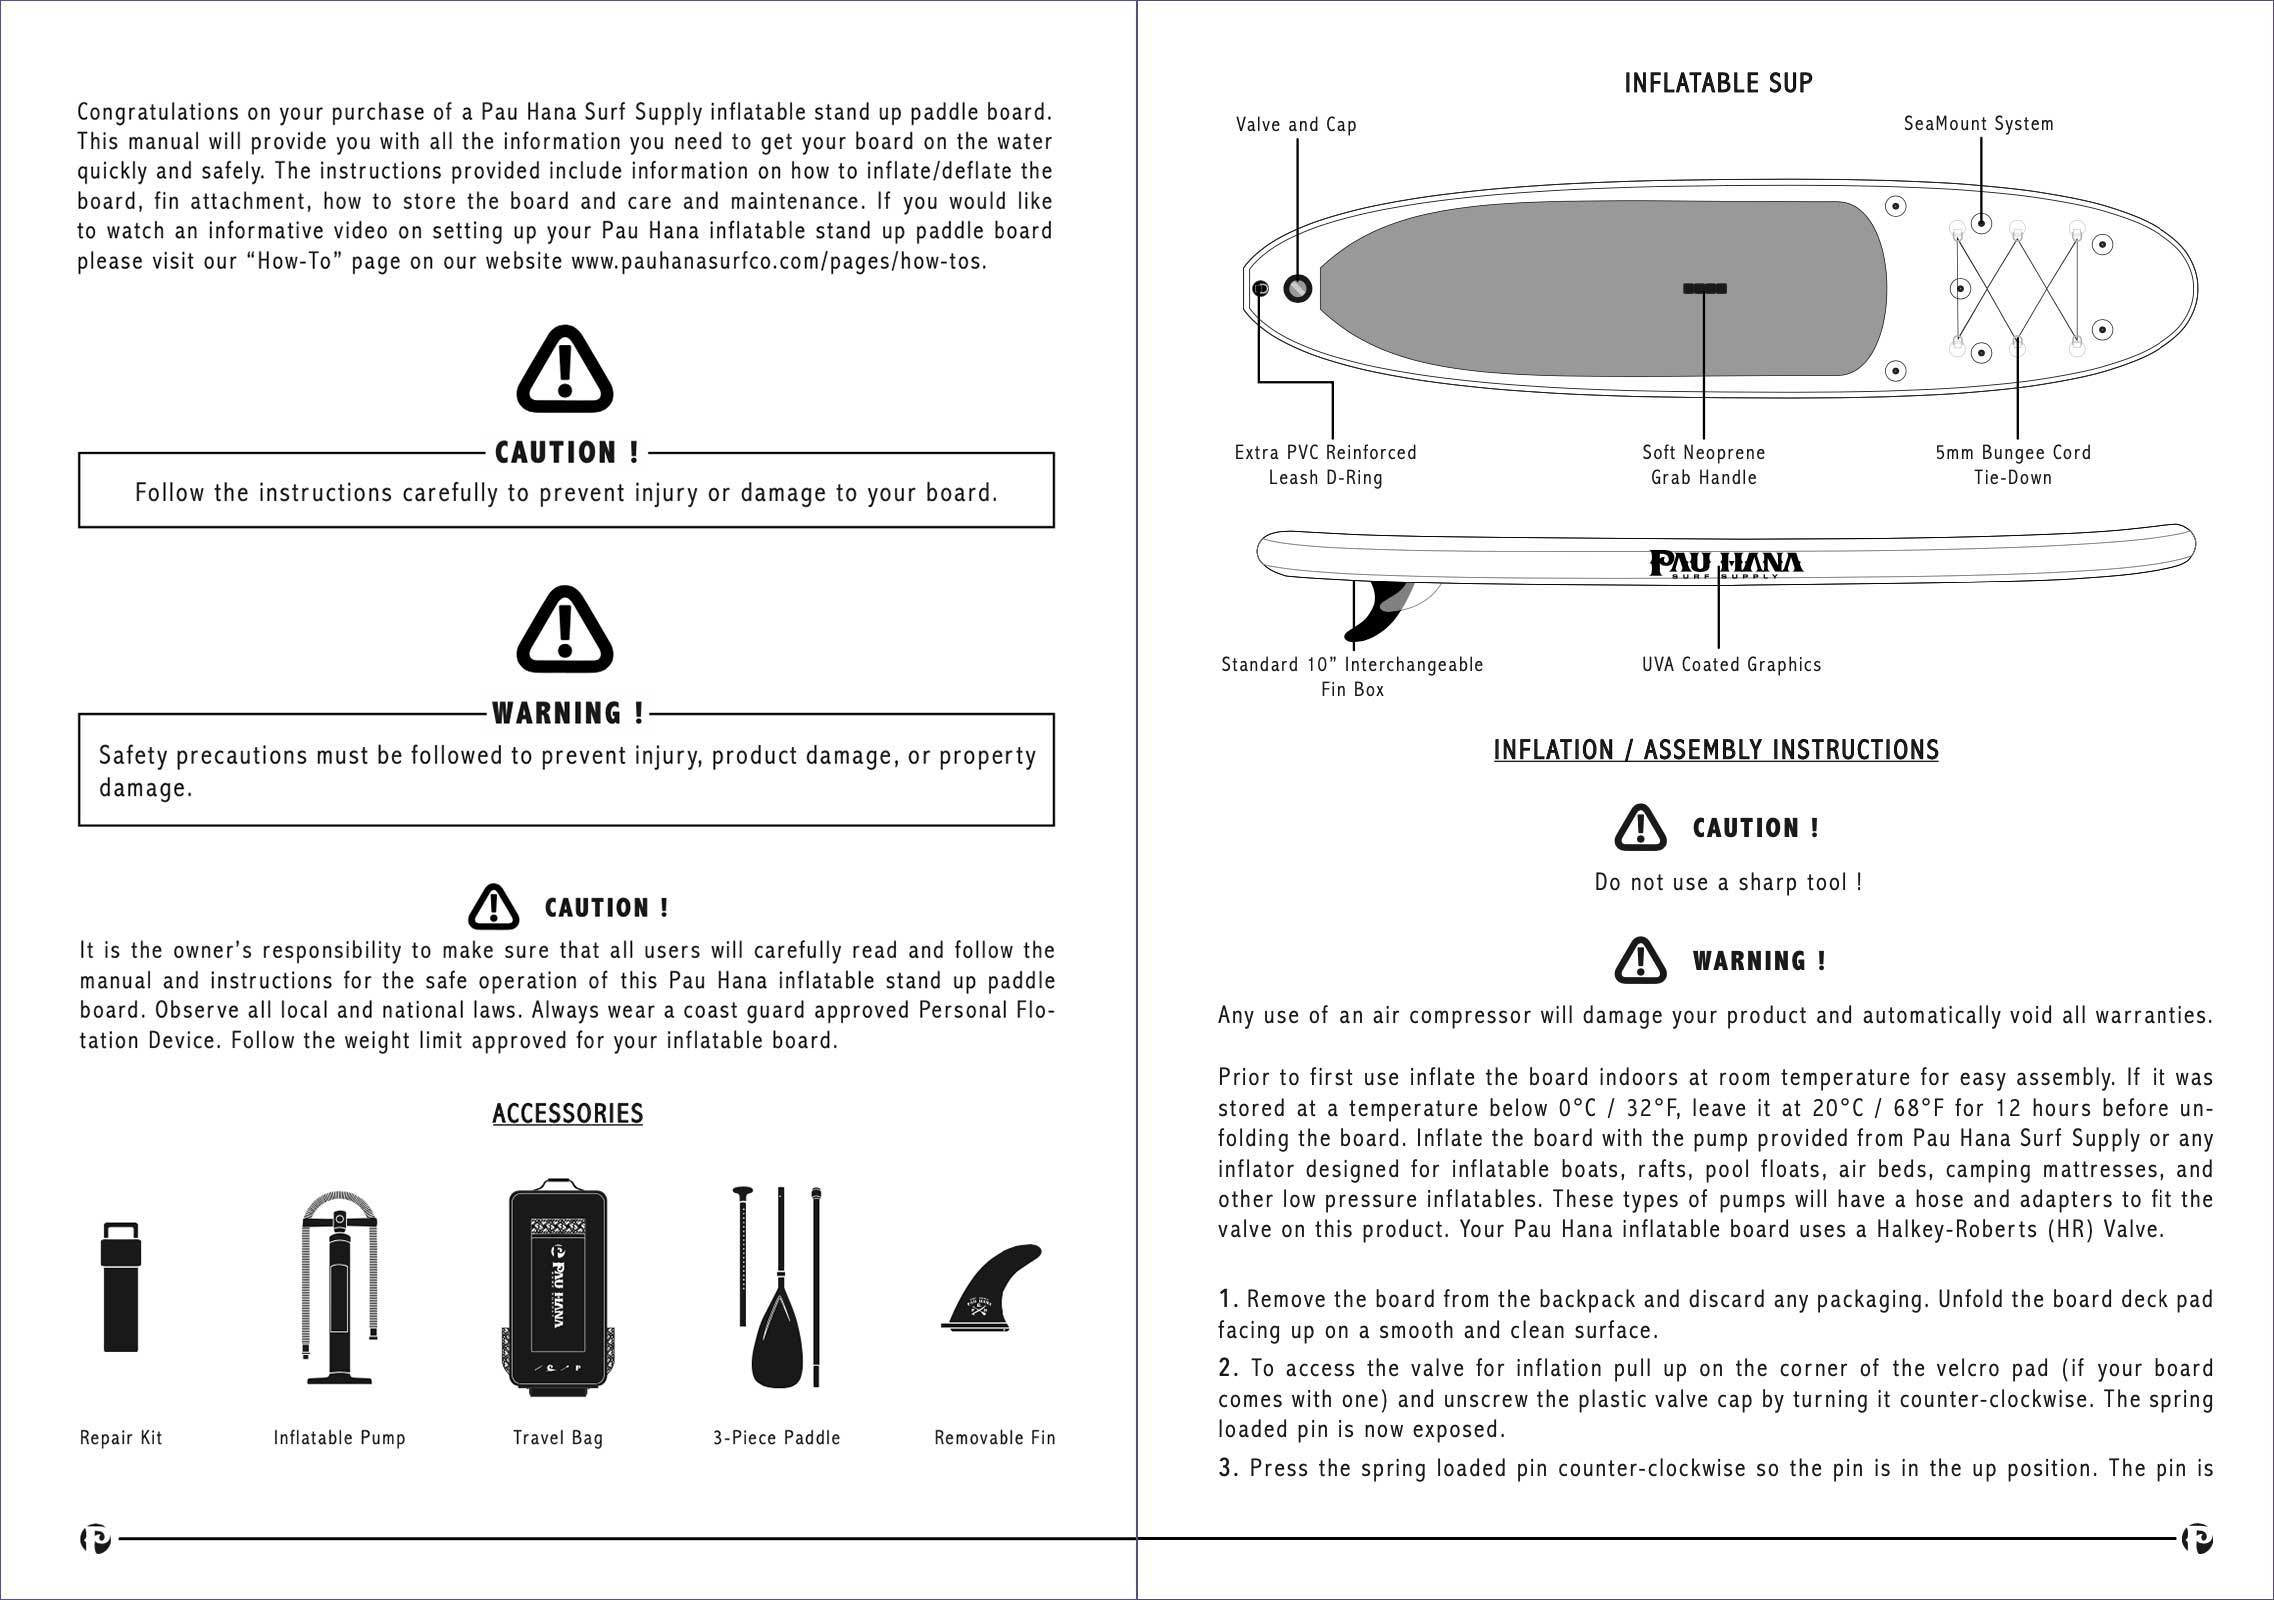 pau hana inflatable stand up paddle board user manual page 2-3